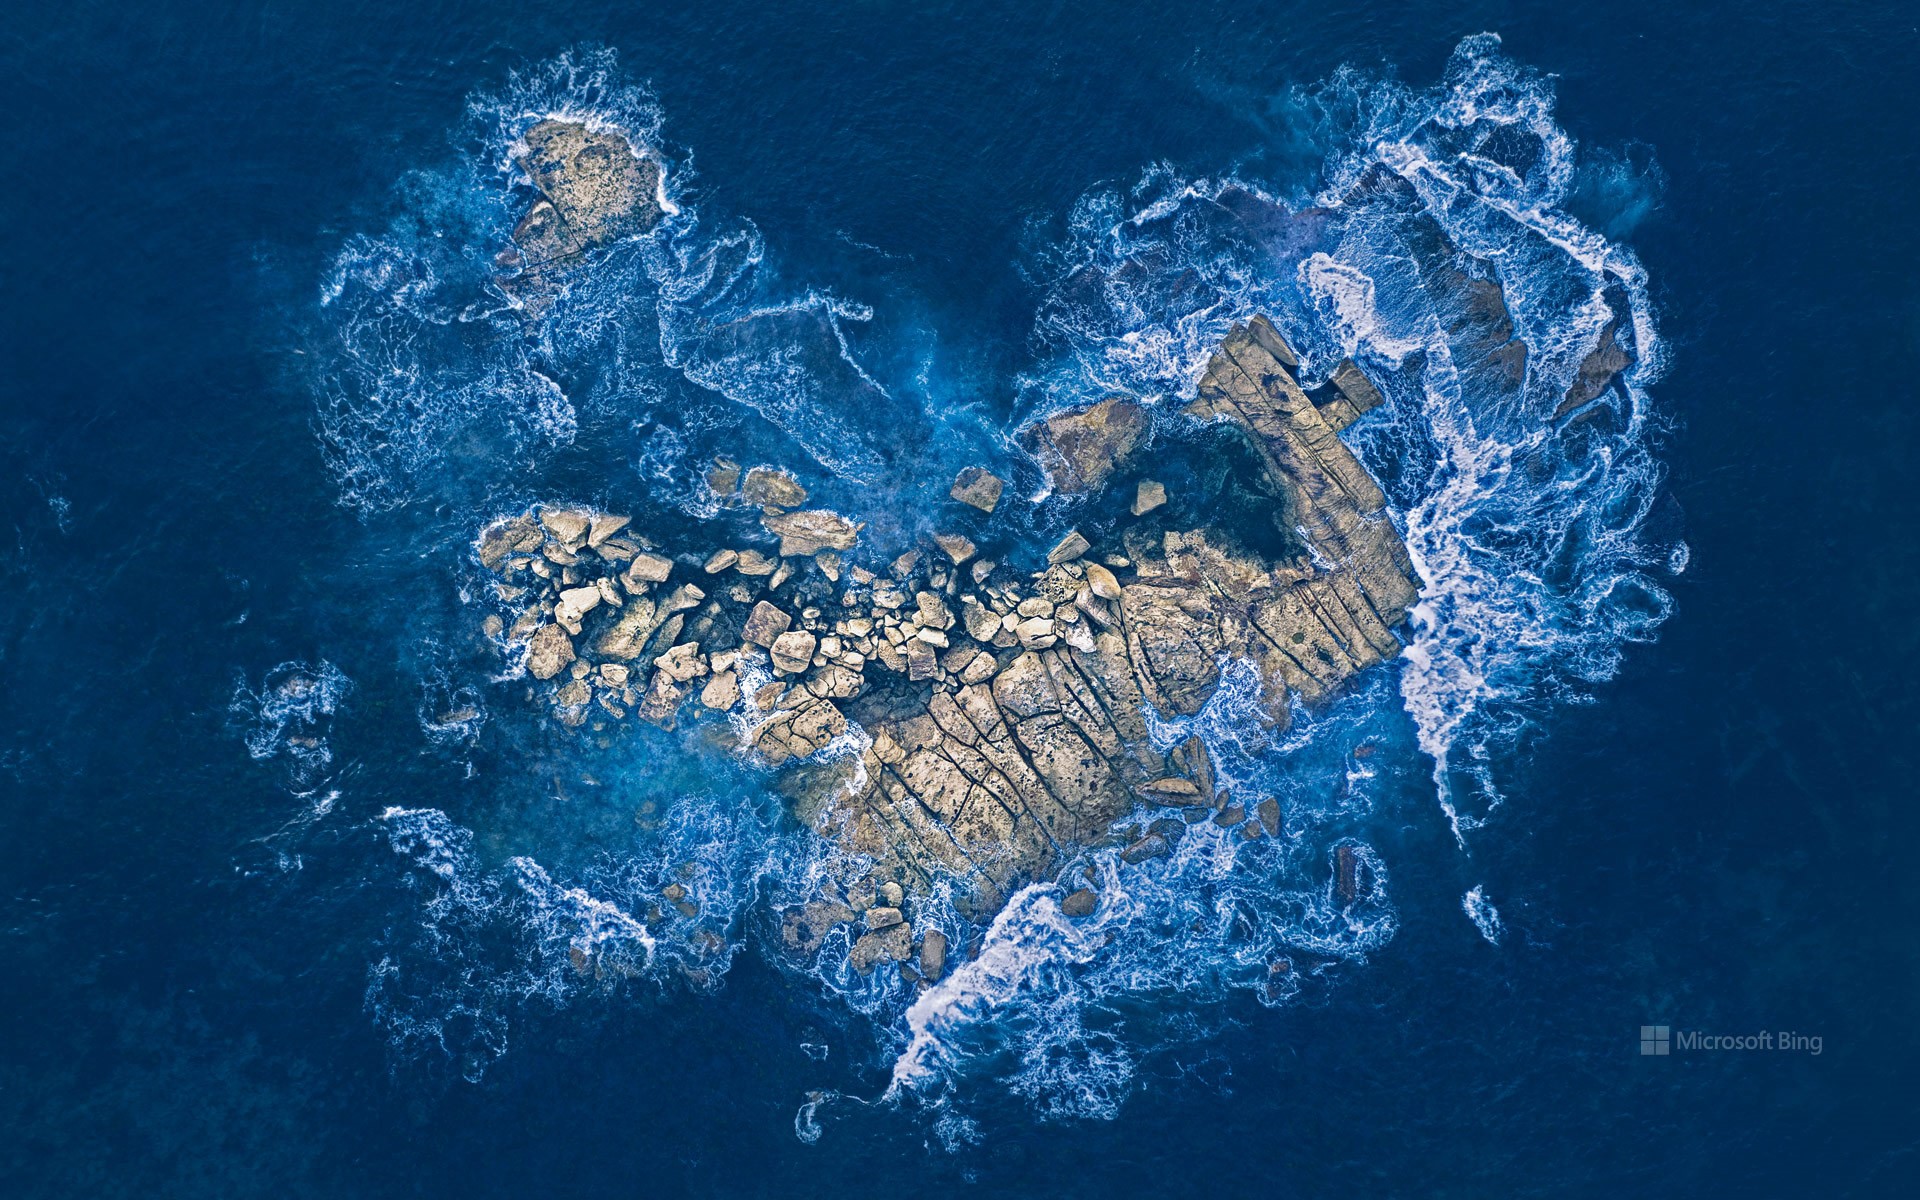 Ocean waves crashing over a heart-shaped rock island off the coast of Sydney, Australia